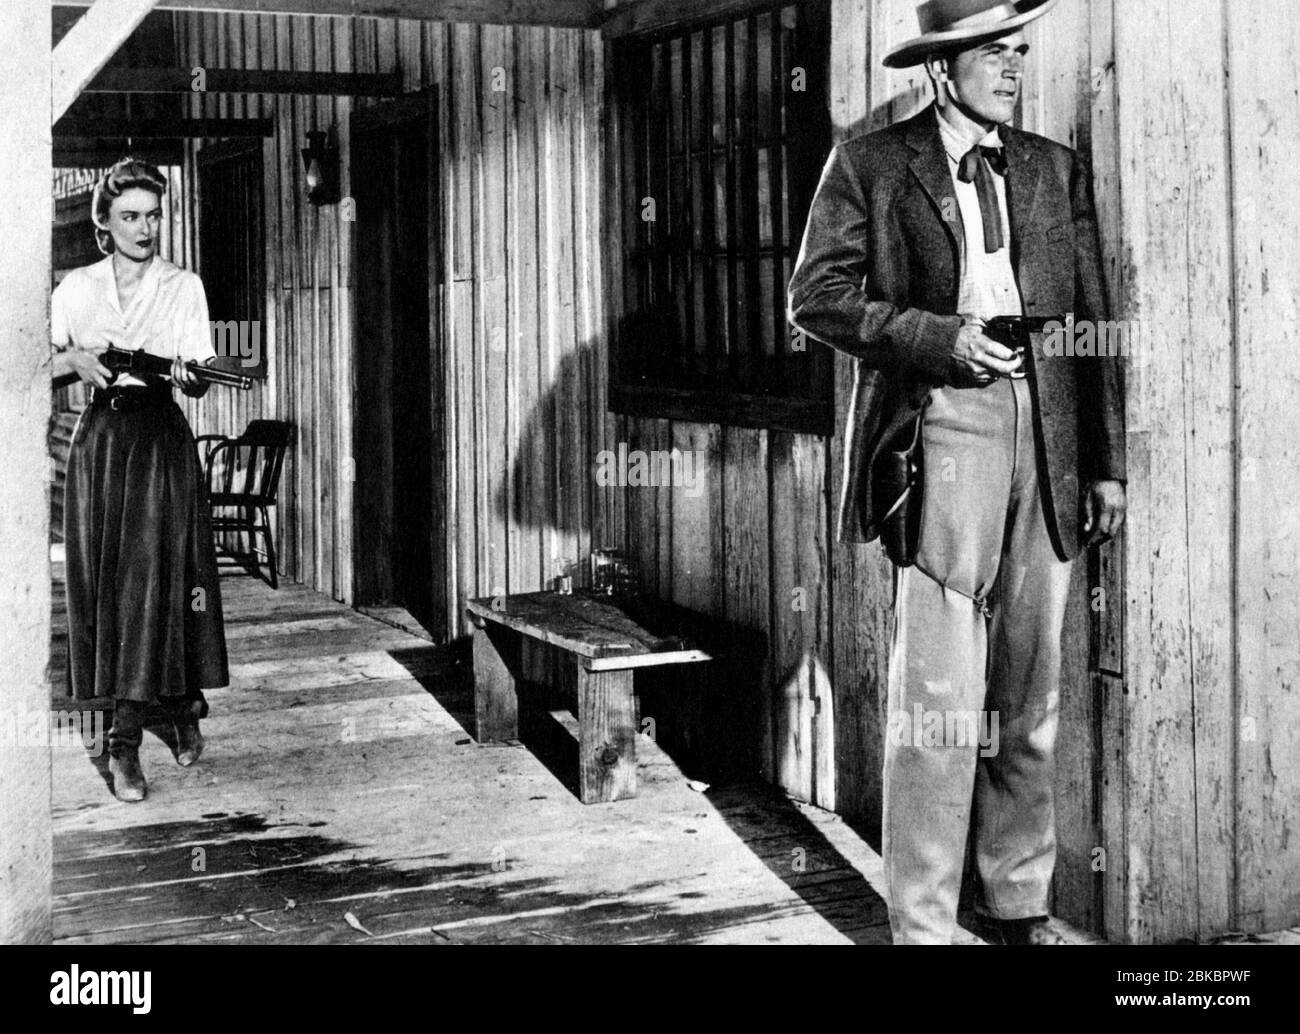 KARIN BOOTH, WILLIAM BISHOP, TOP GUN, 1955 Stock Photo - Alamy